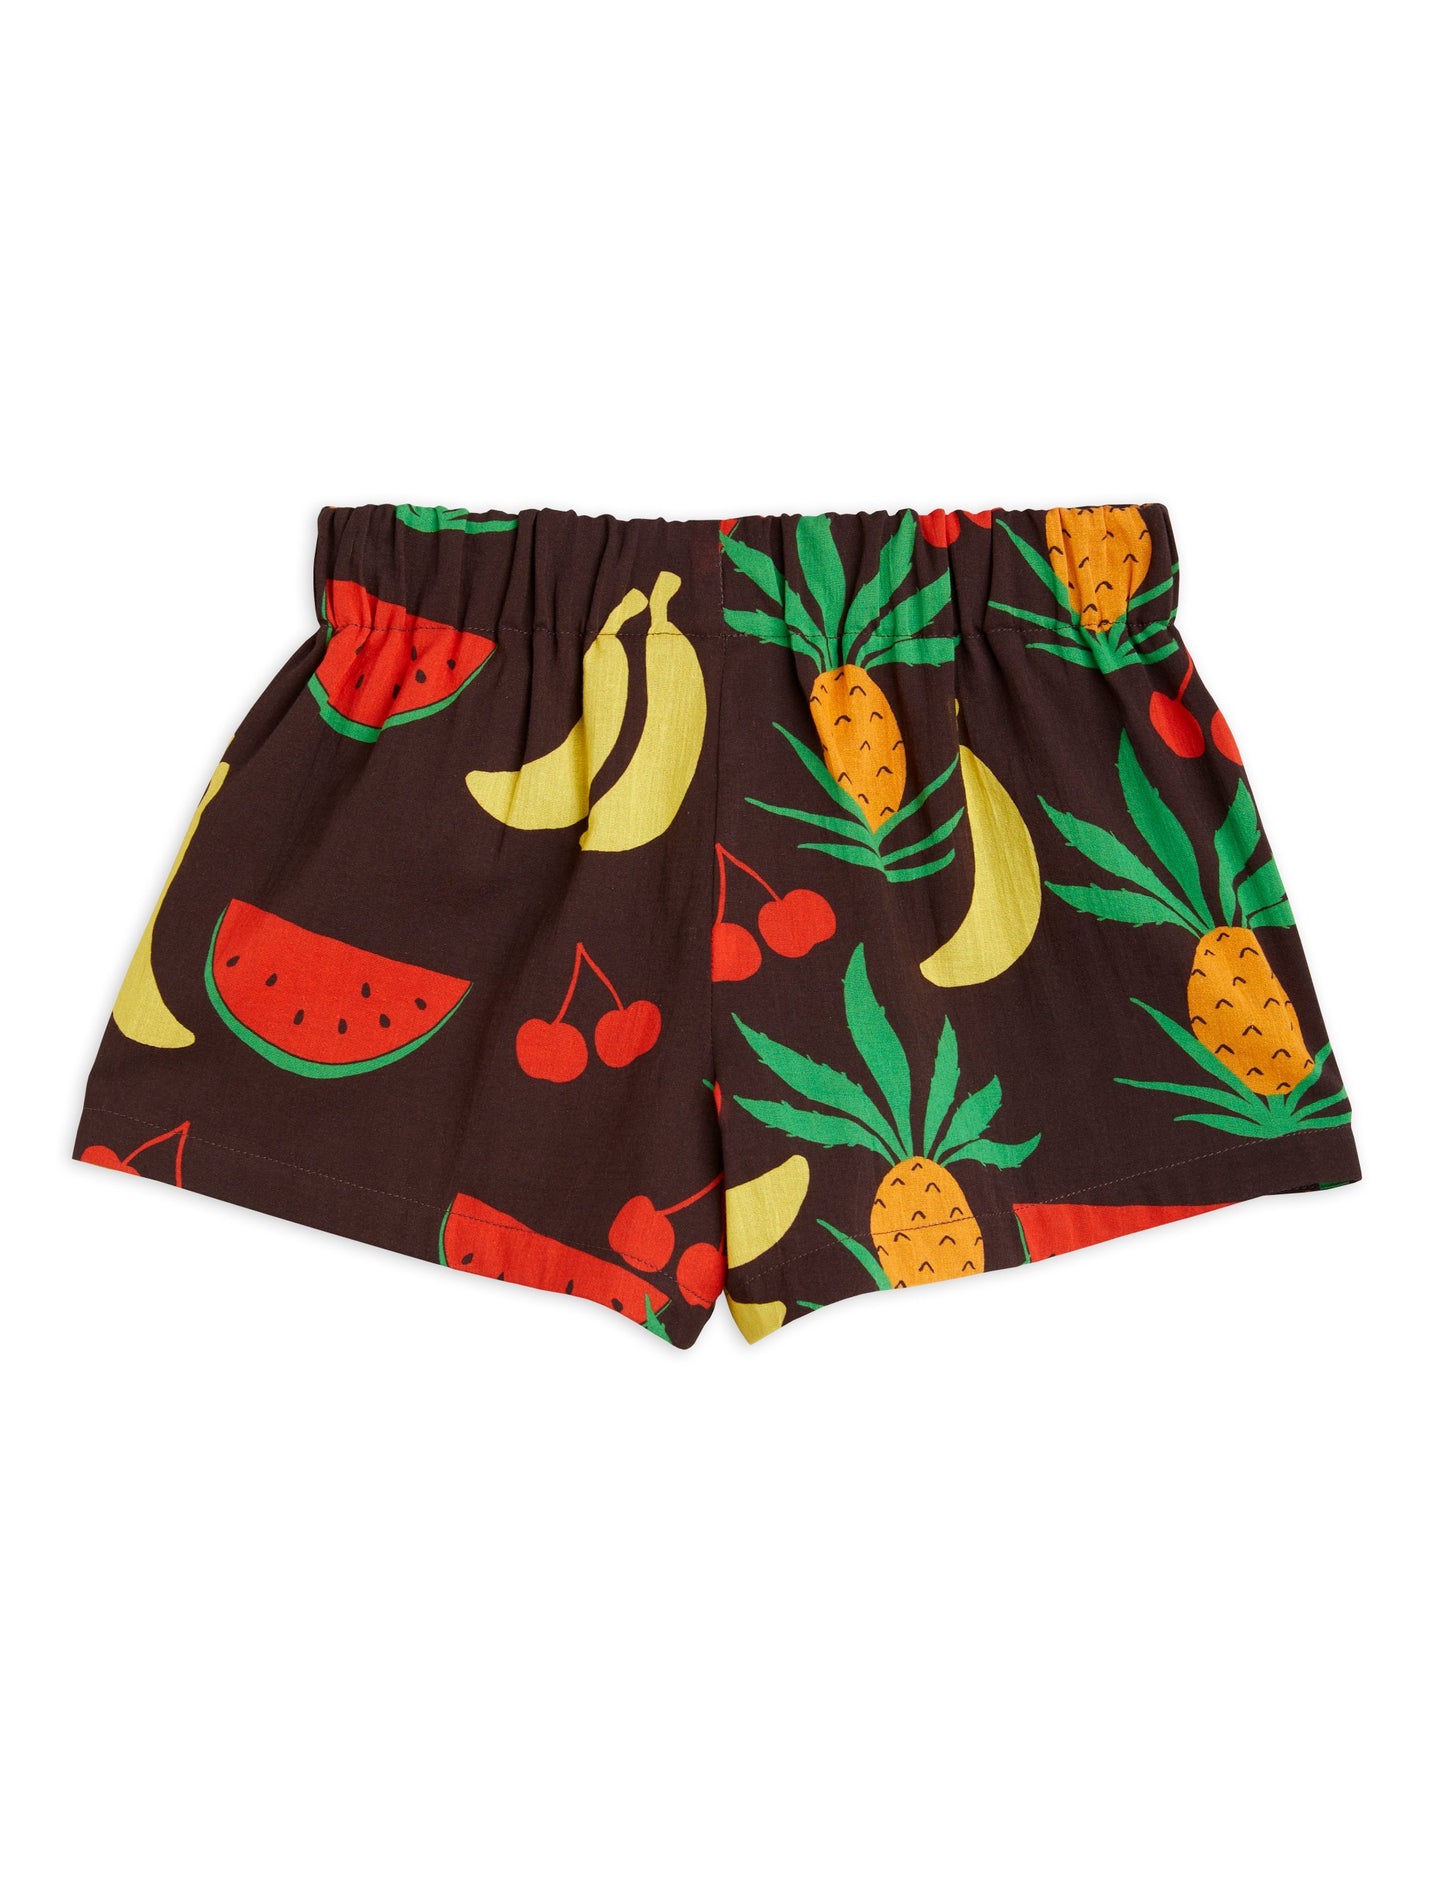 Fruits woven shorts